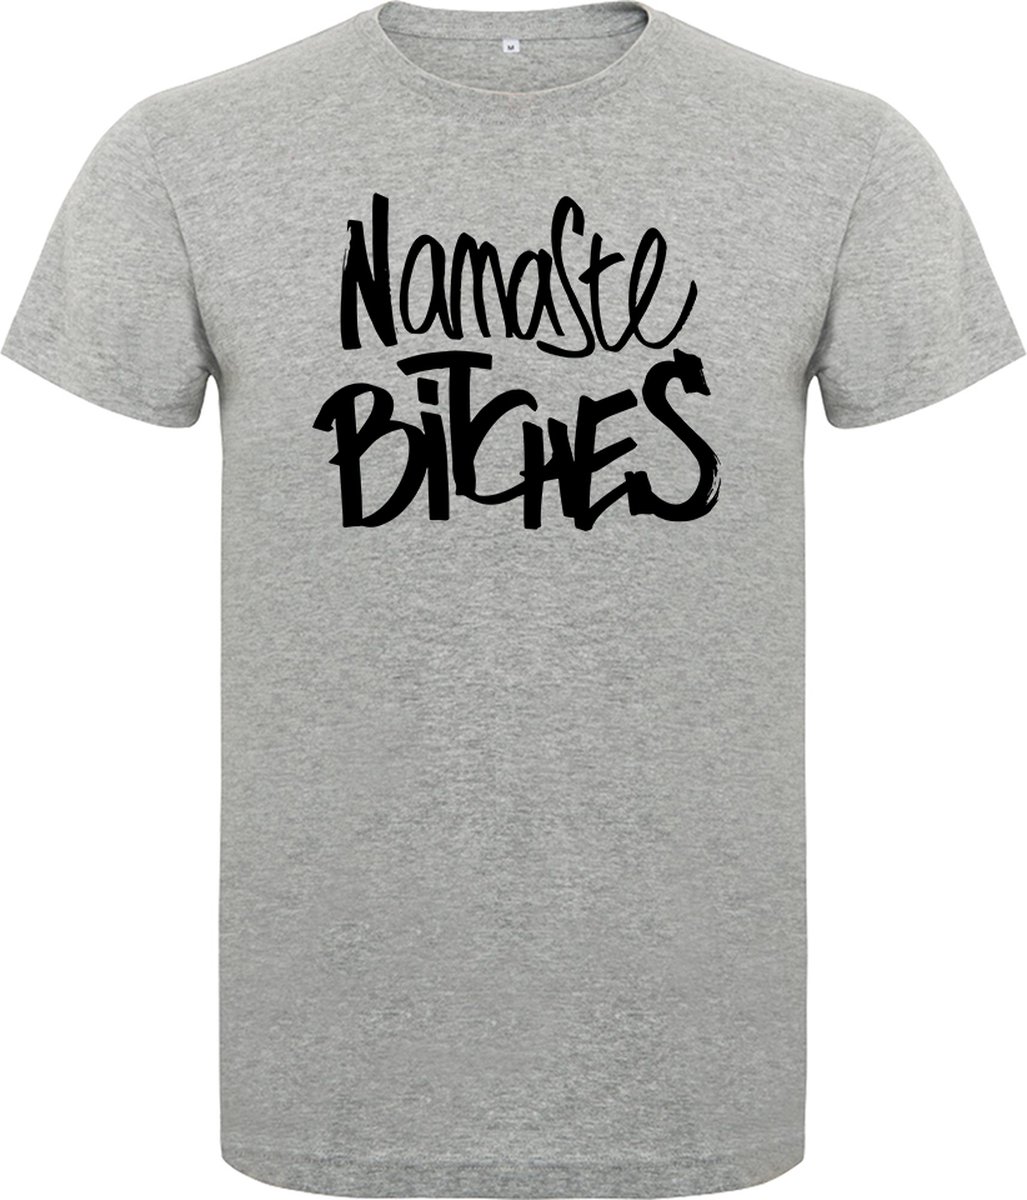 T-Shirt - Casual T-Shirt - Fun T-Shirt - Fun Tekst - Lifestyle T-Shirt - Grappig - Mood - Sport - Yoga - Relax - Vibe - Namaste Bitches - Maat XXXL - 3XL